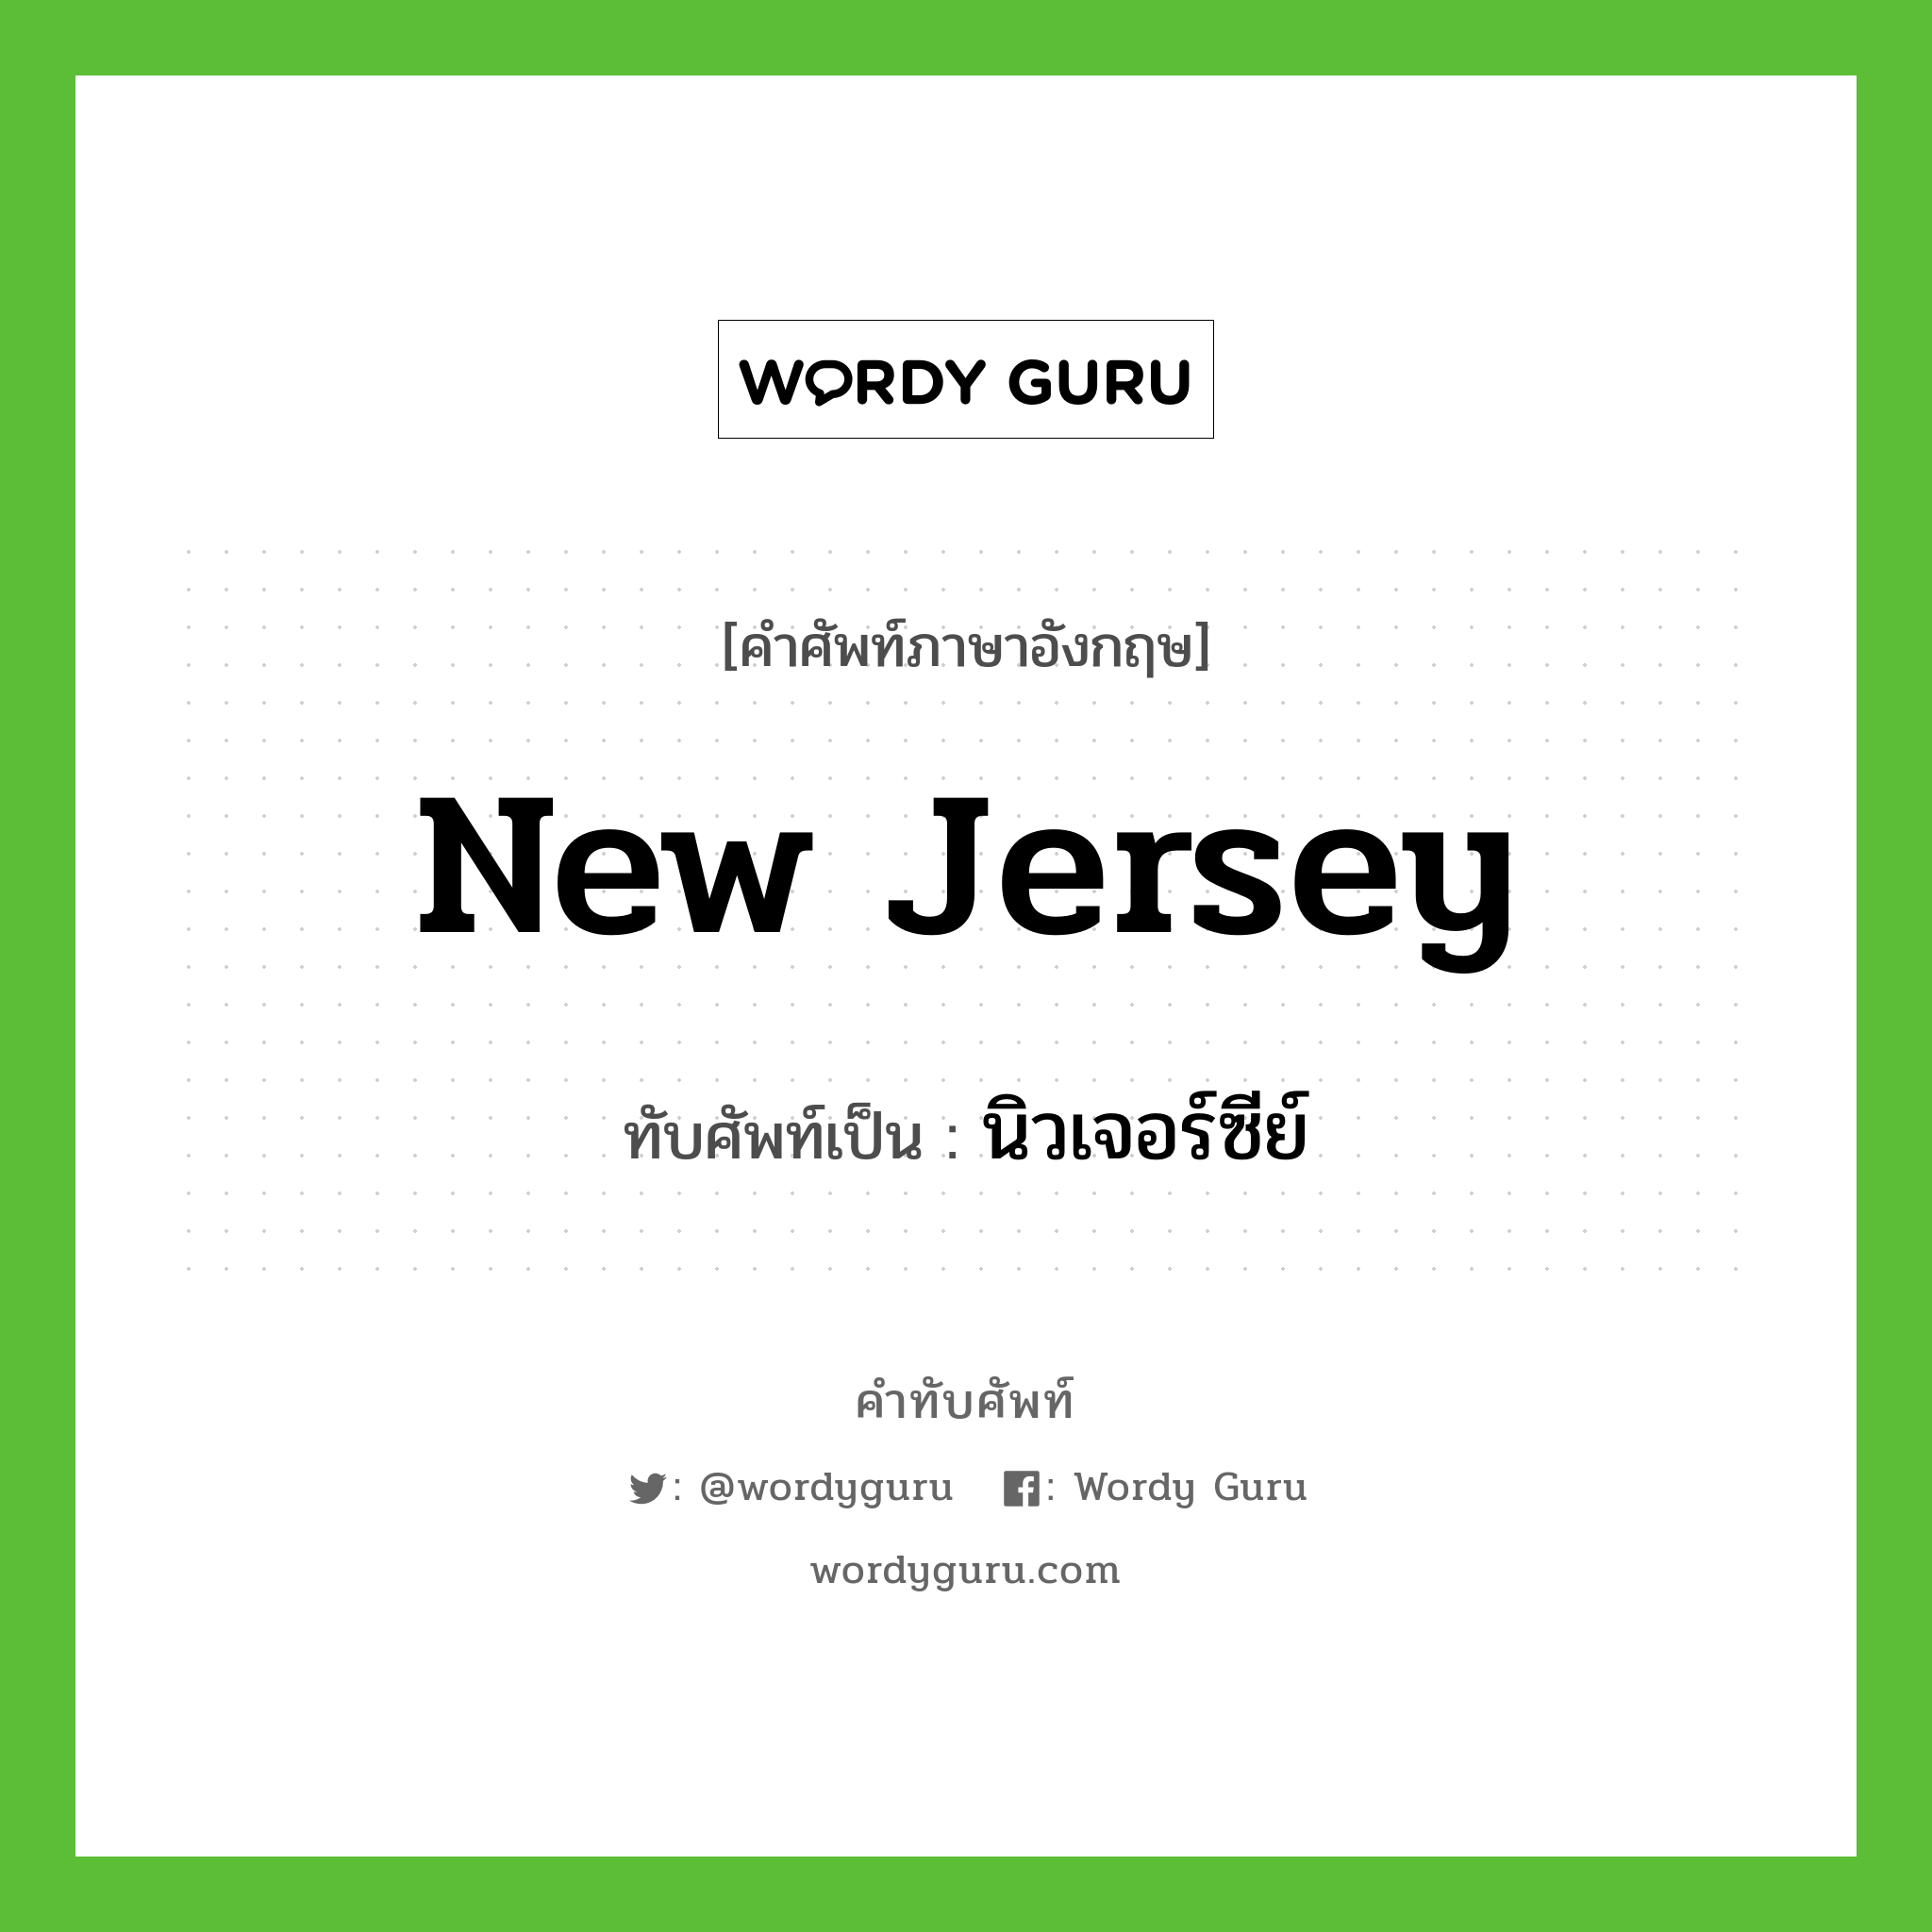 New Jersey เขียนเป็นคำไทยว่าอะไร?, คำศัพท์ภาษาอังกฤษ New Jersey ทับศัพท์เป็น นิวเจอร์ซีย์